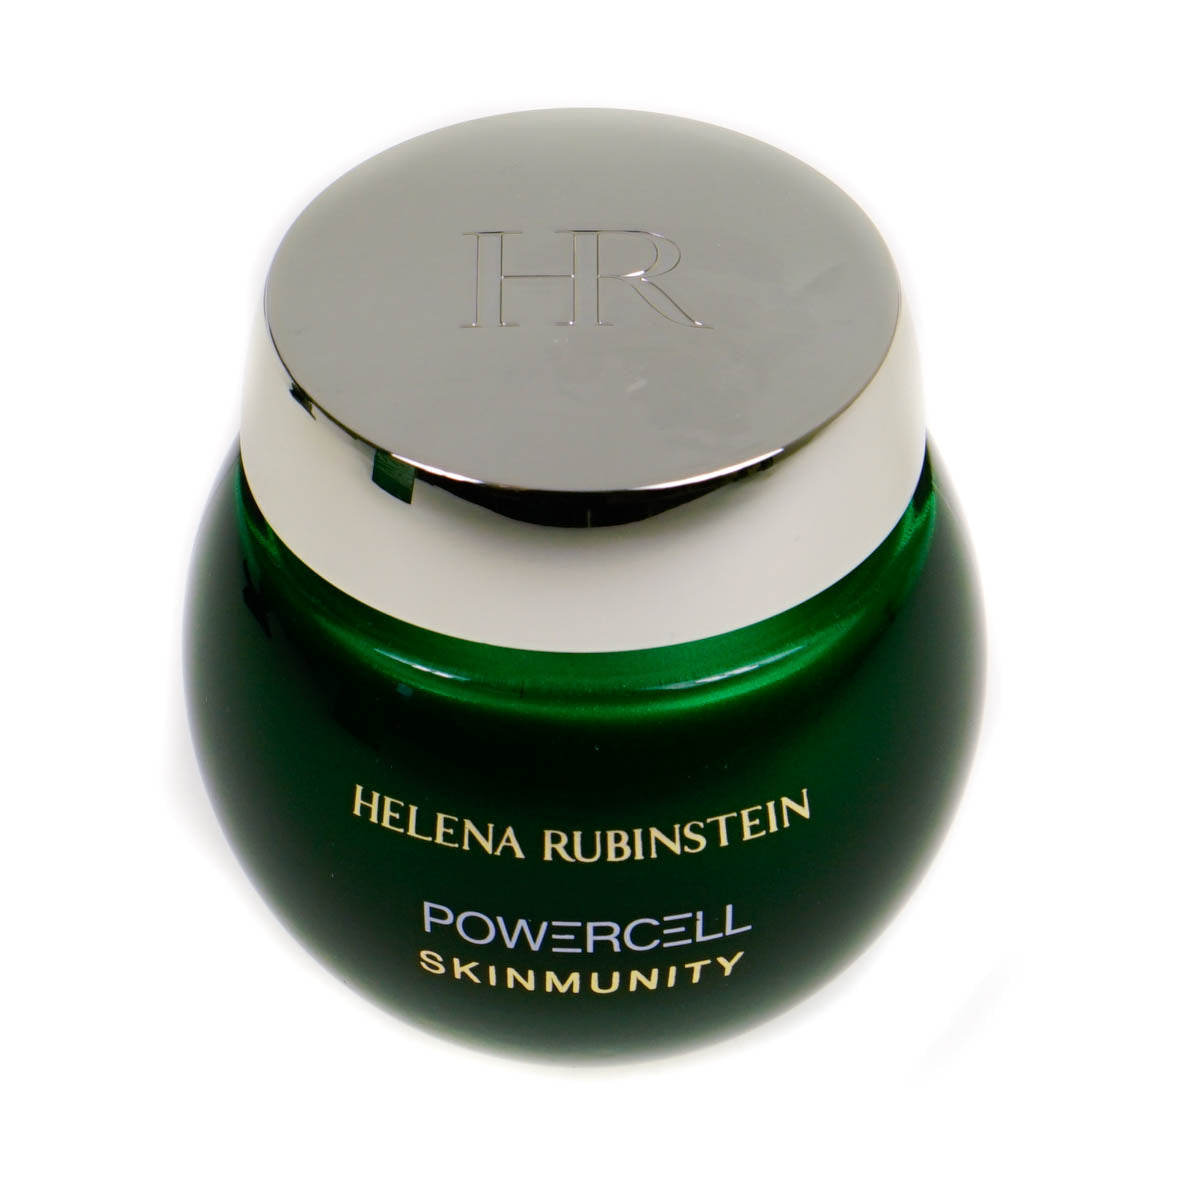 Helena Rubinstein Powercell Skinmunity The Cream 50ml (Blemished Box)